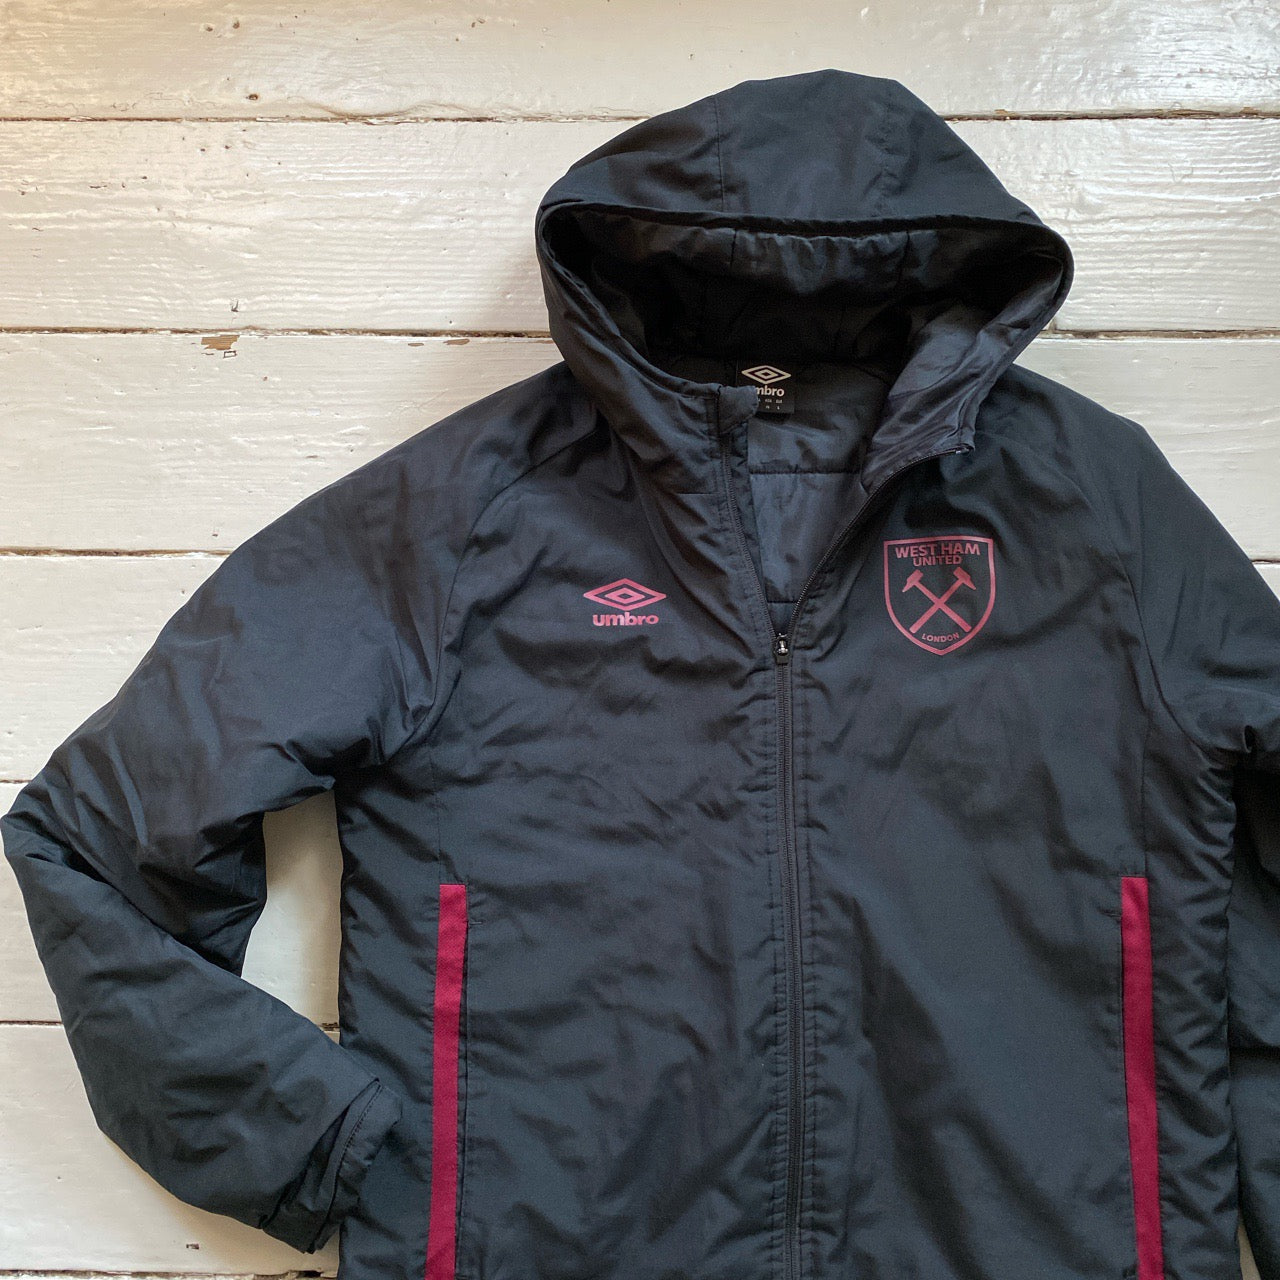 Umbro West Ham United Coat (Large)